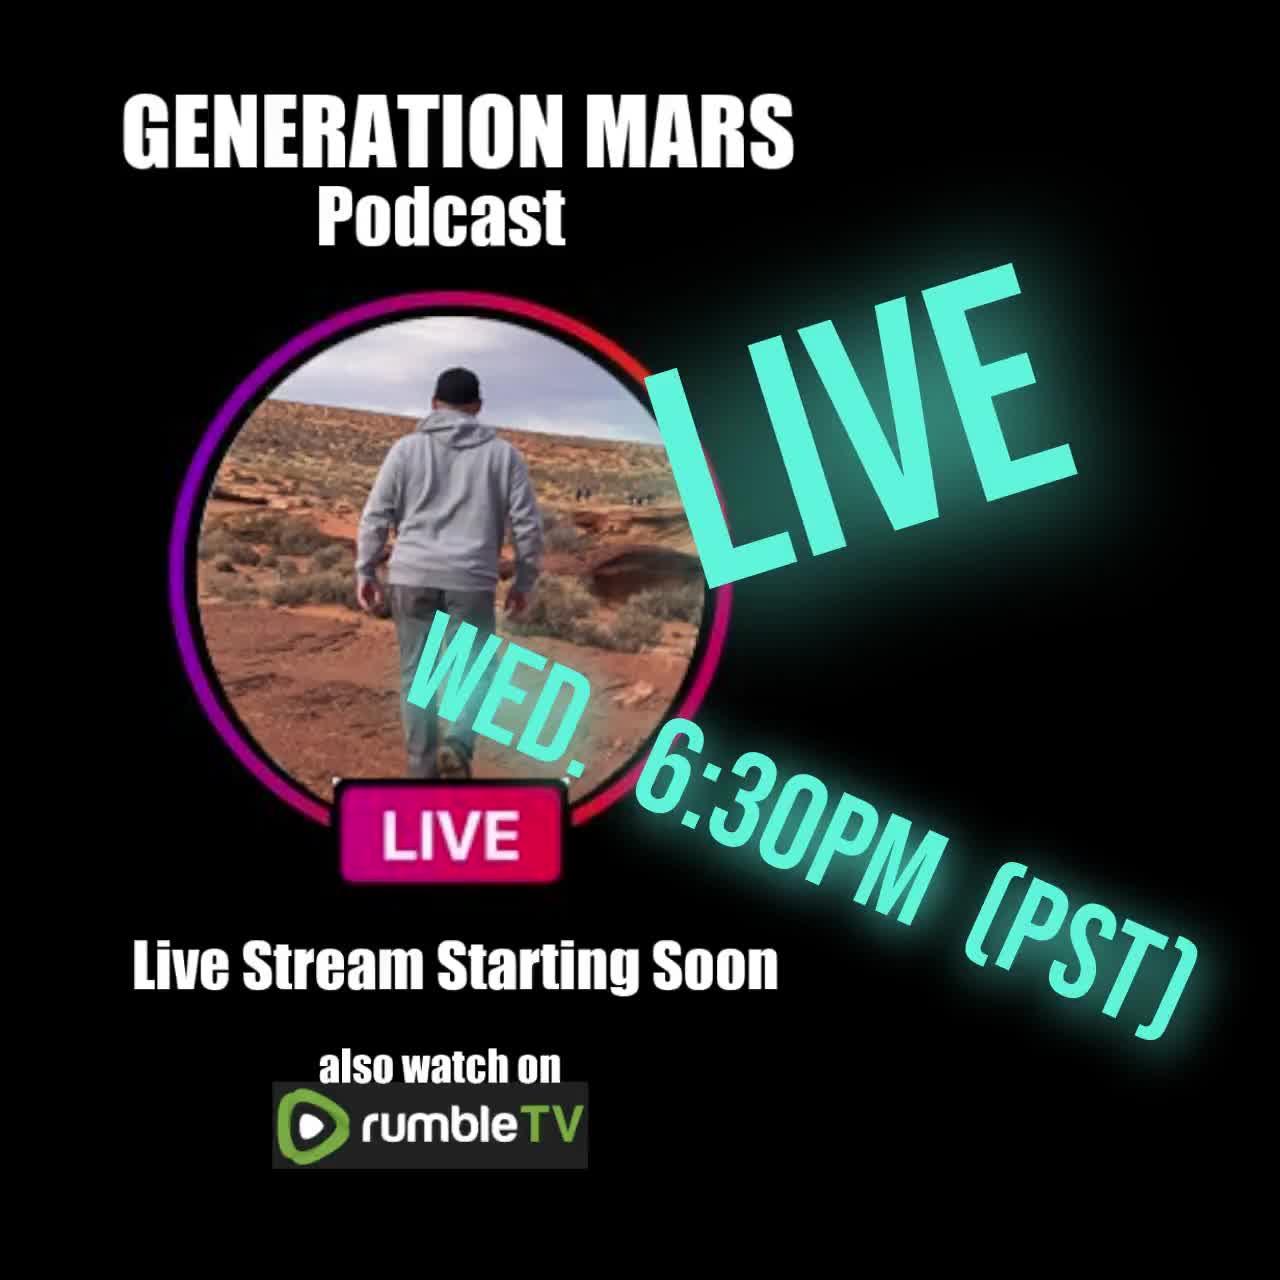 GENERATION MARS Podcast Nov. 30th 2022 LIVE 6:30pm (pst)